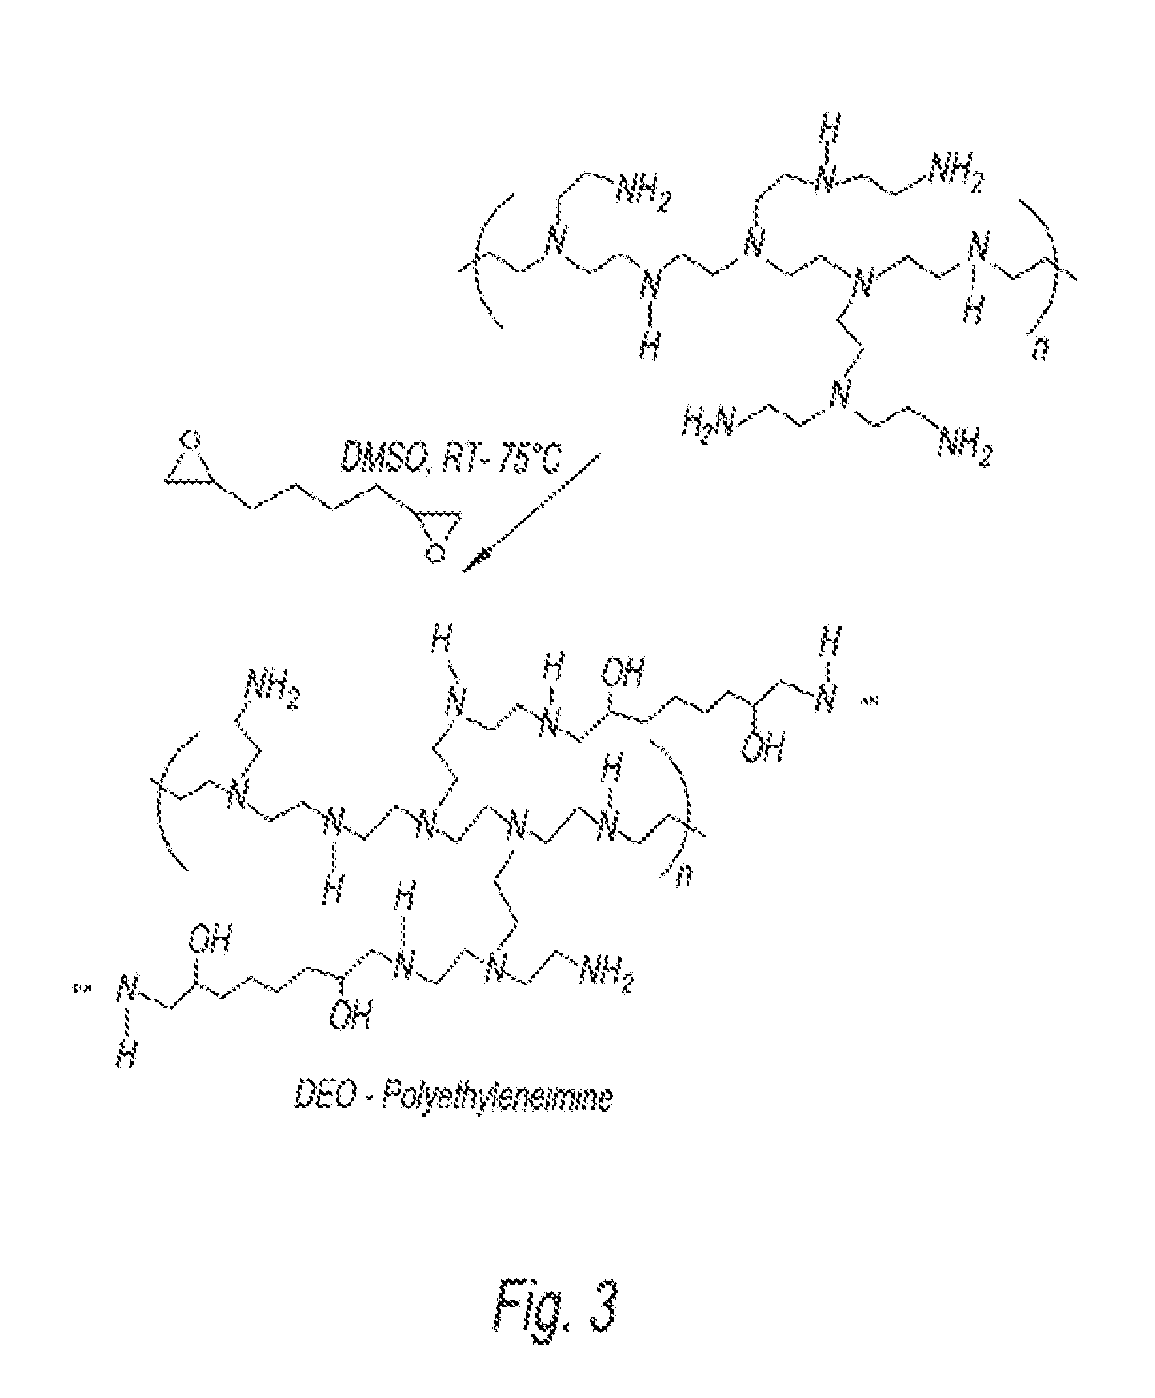 Epoxy-Amine Acid Gas Adsorption-Desorption Polymers and Oligomers, Processes for Preparing Same, and Uses Thereof